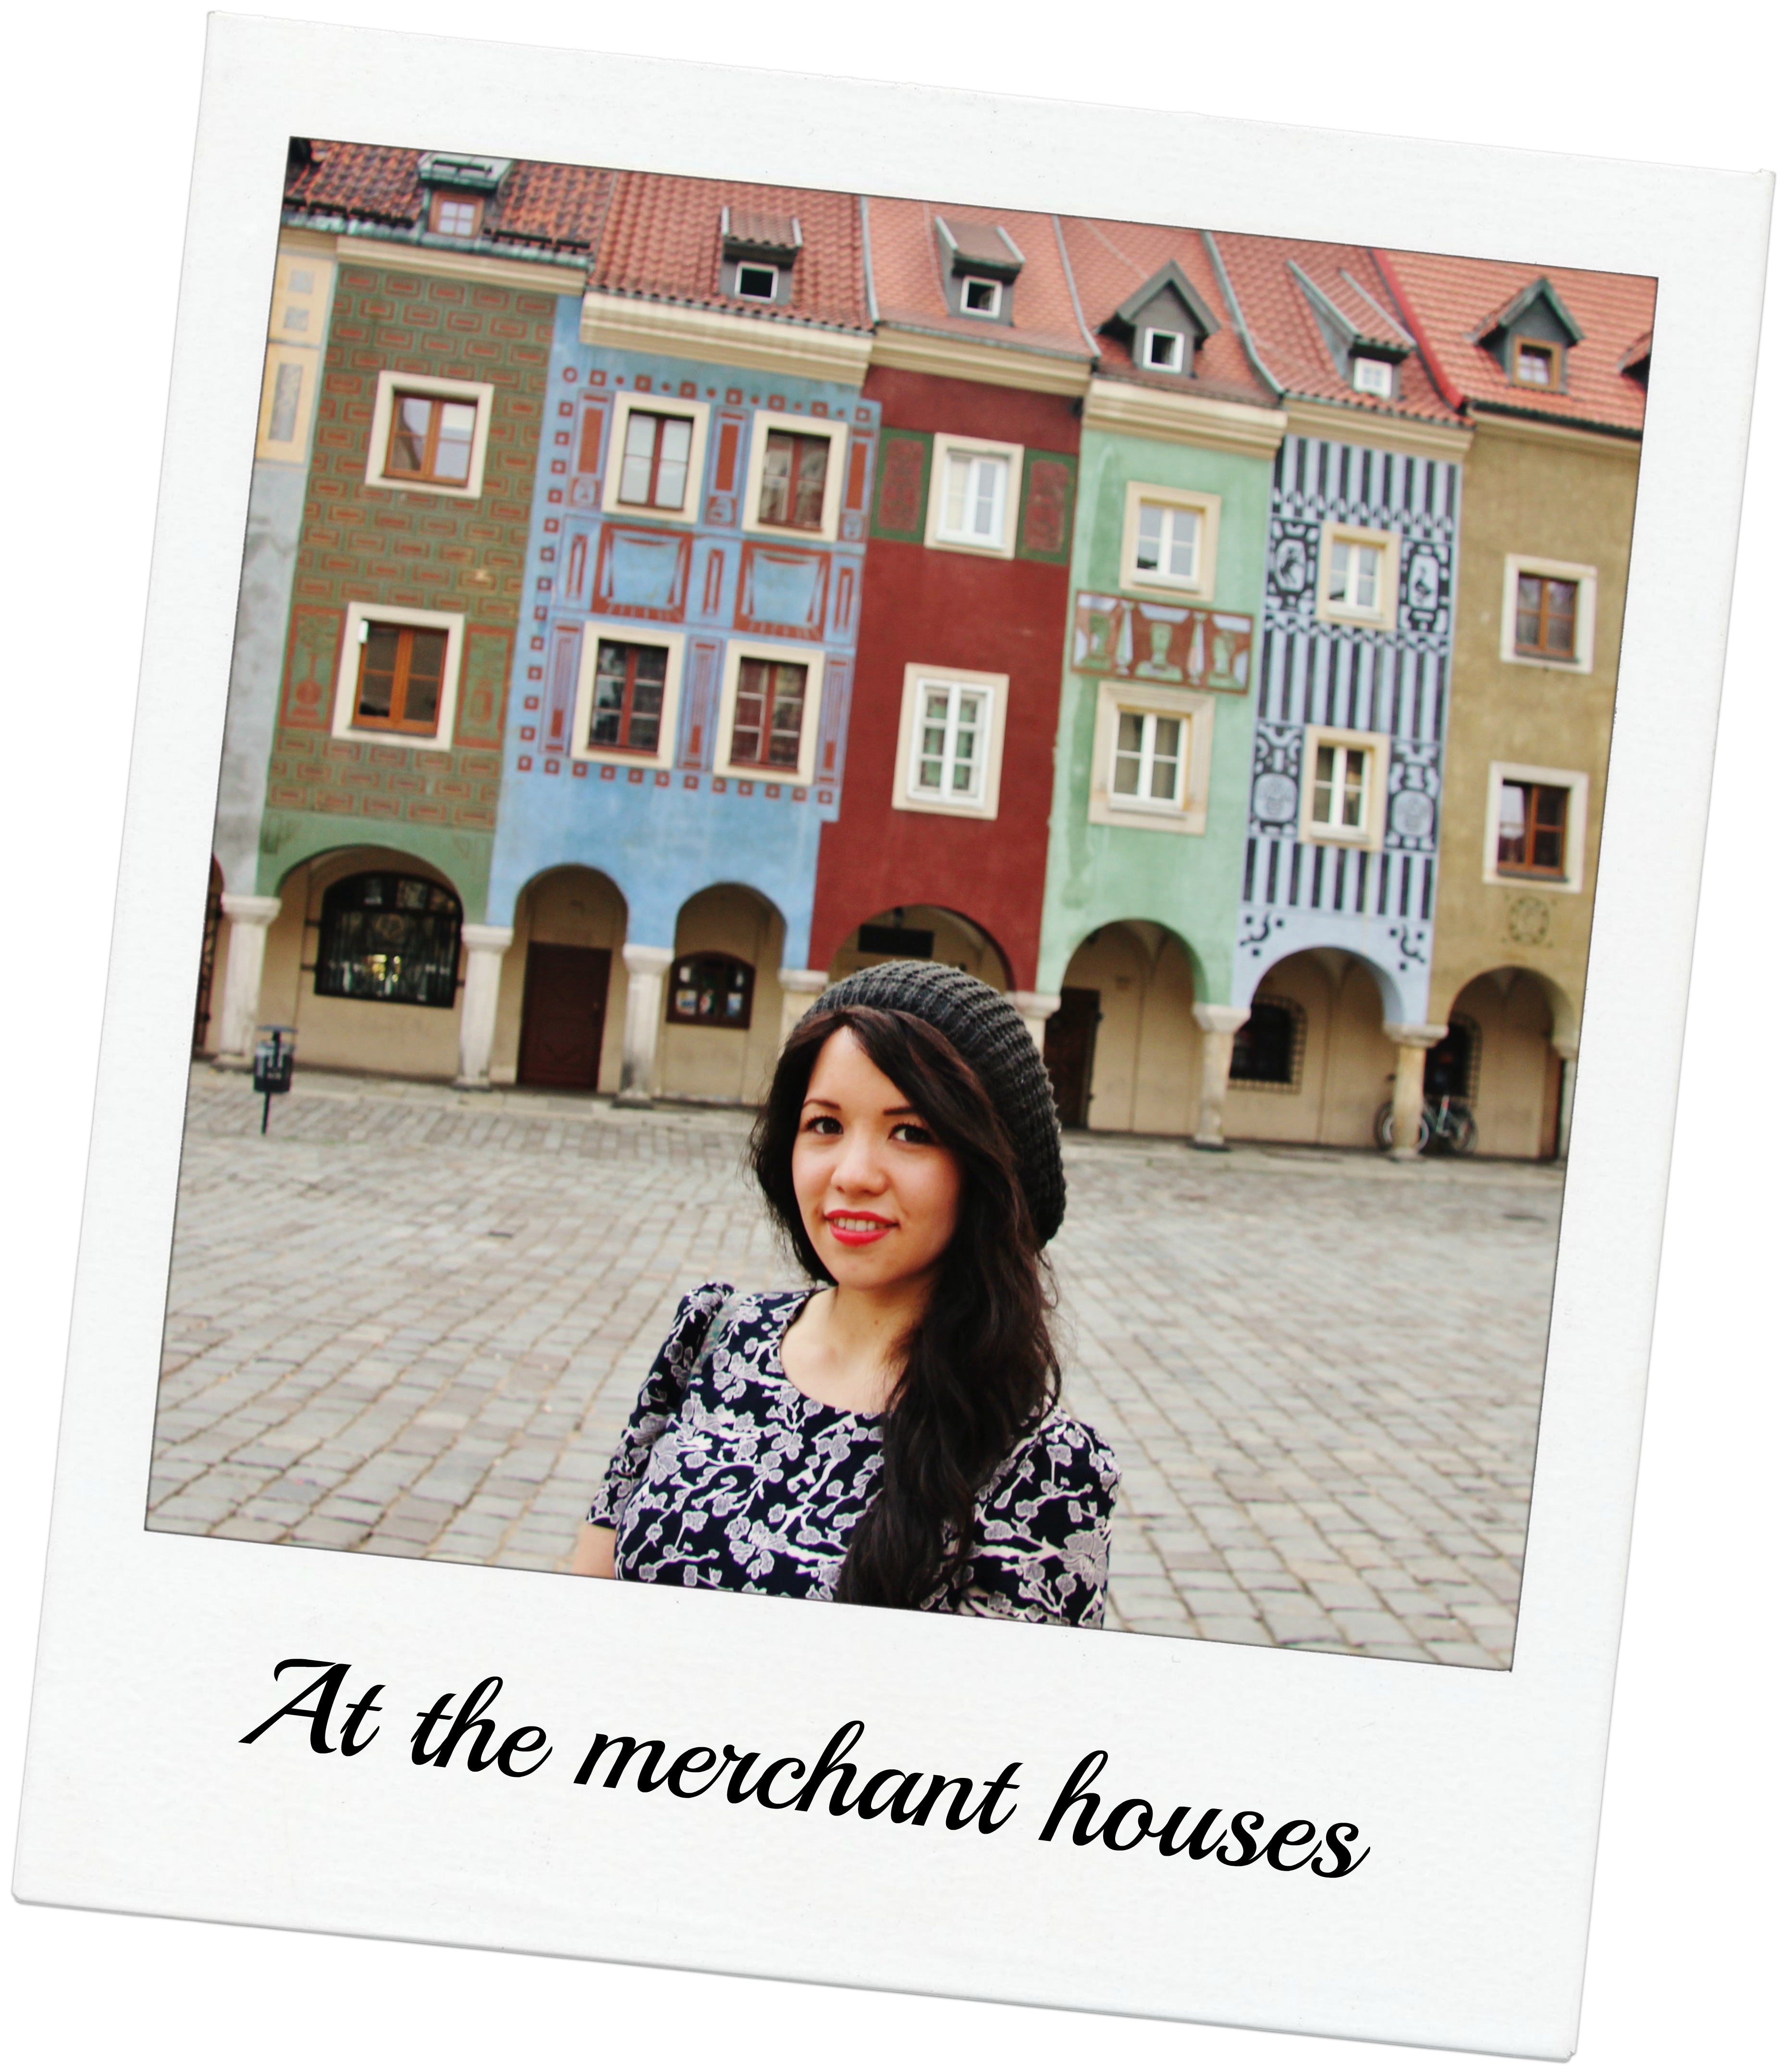 Merchant houses in old market, Poznan,